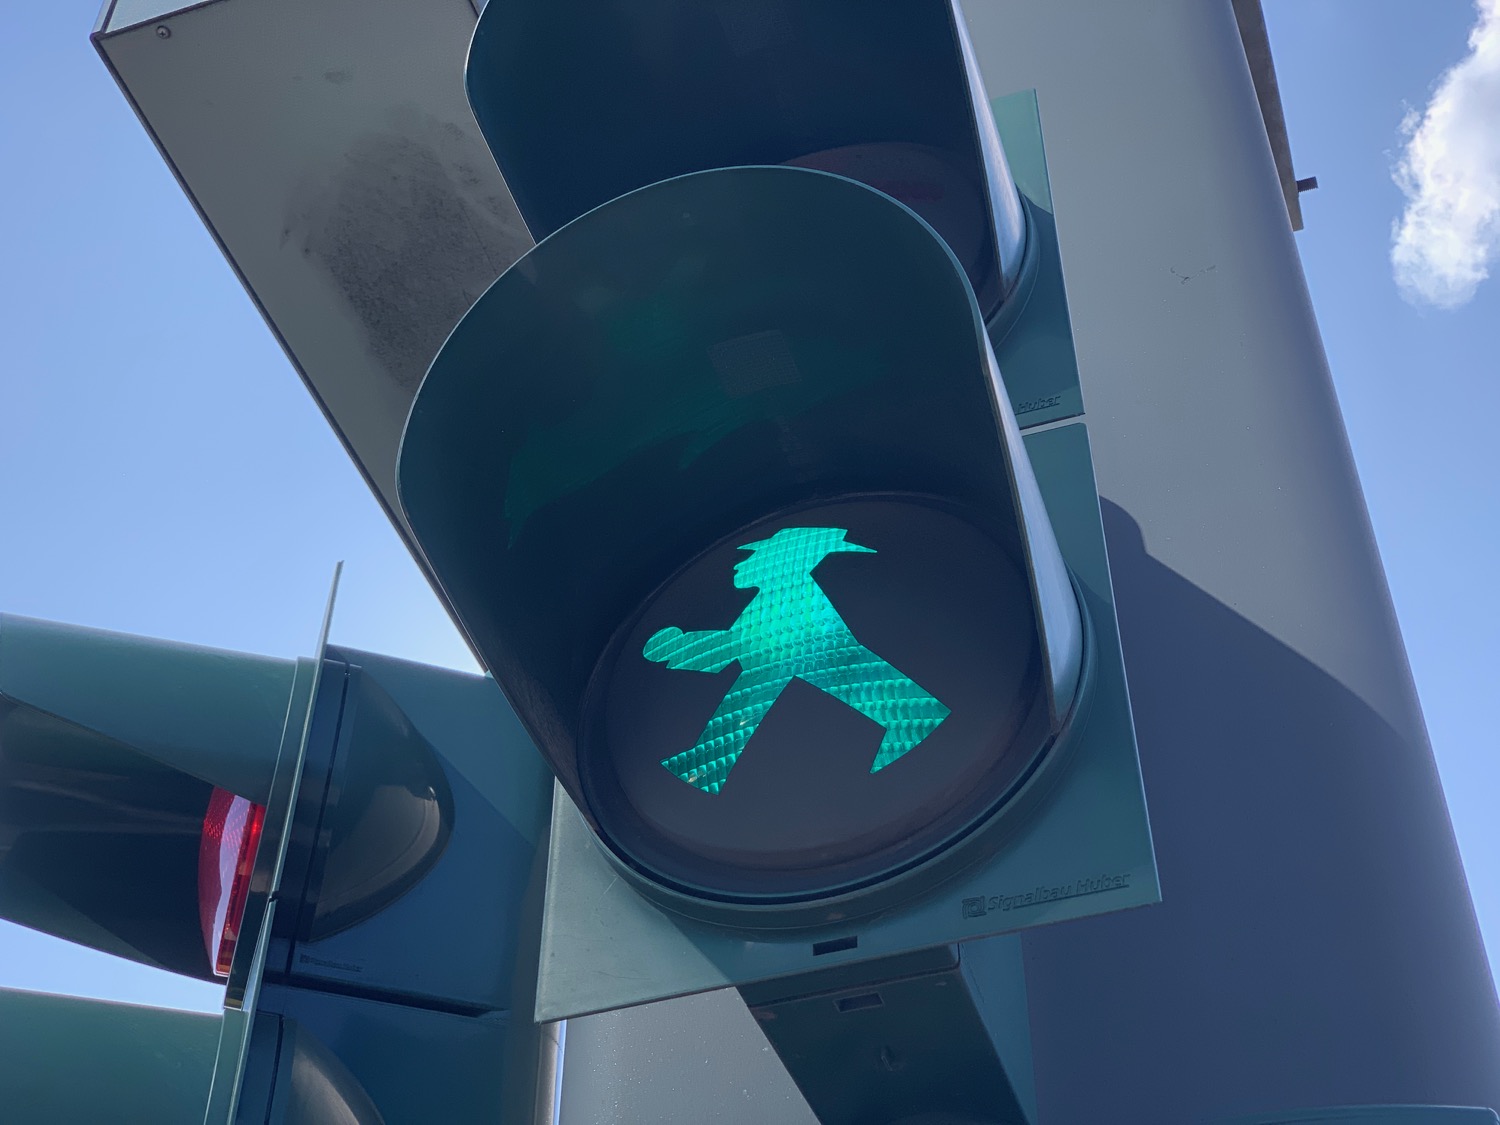 a green traffic light with a man walking symbol